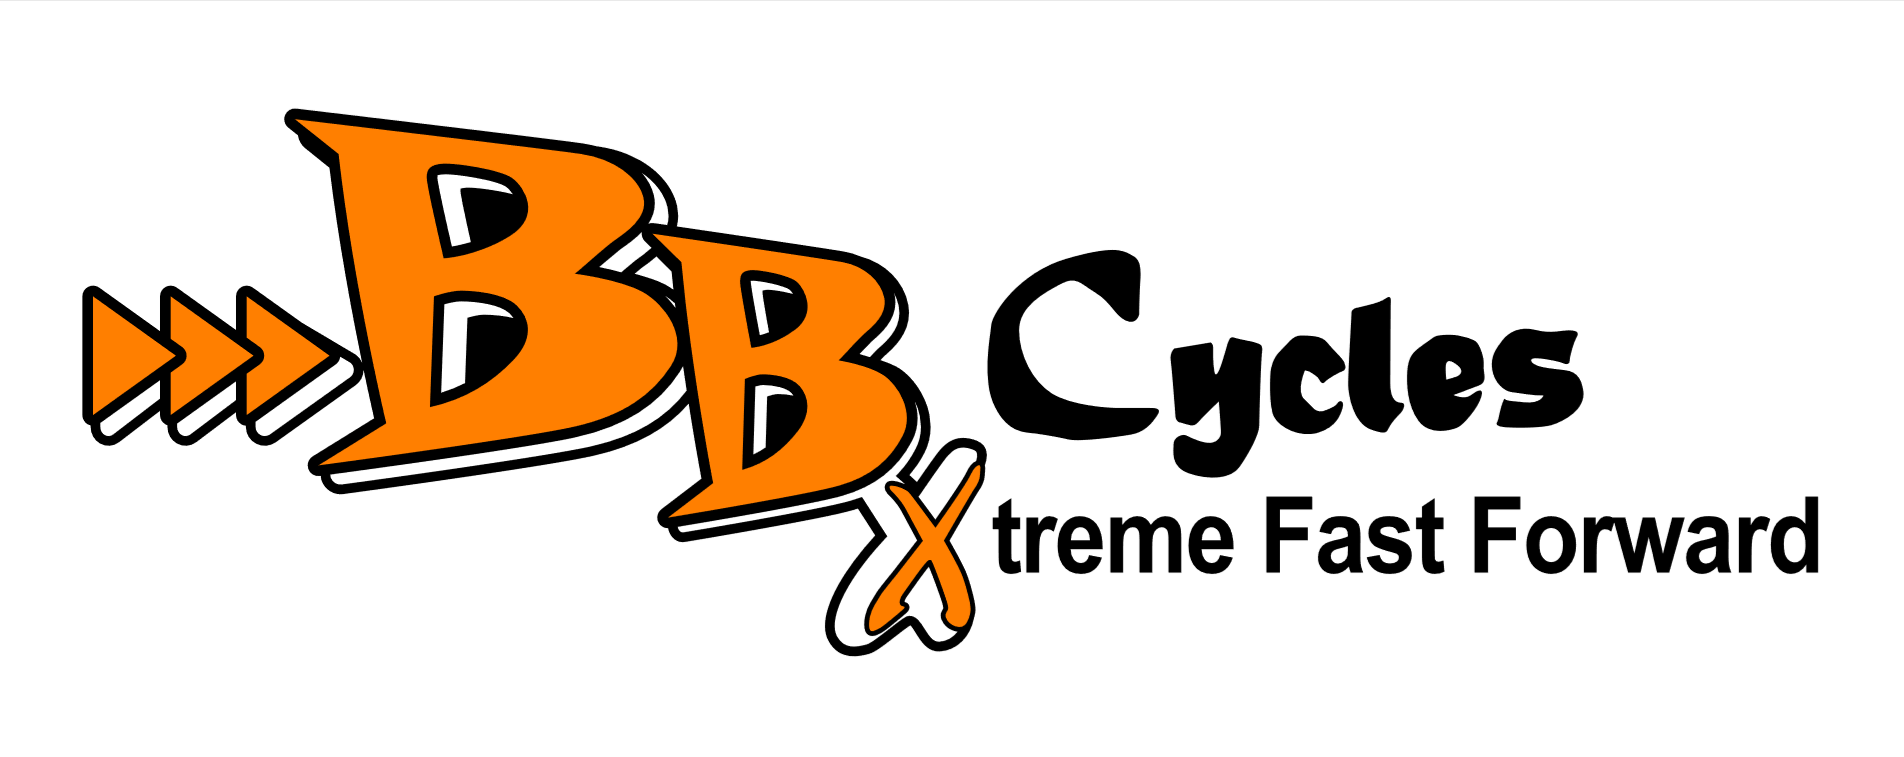 BB Cycles